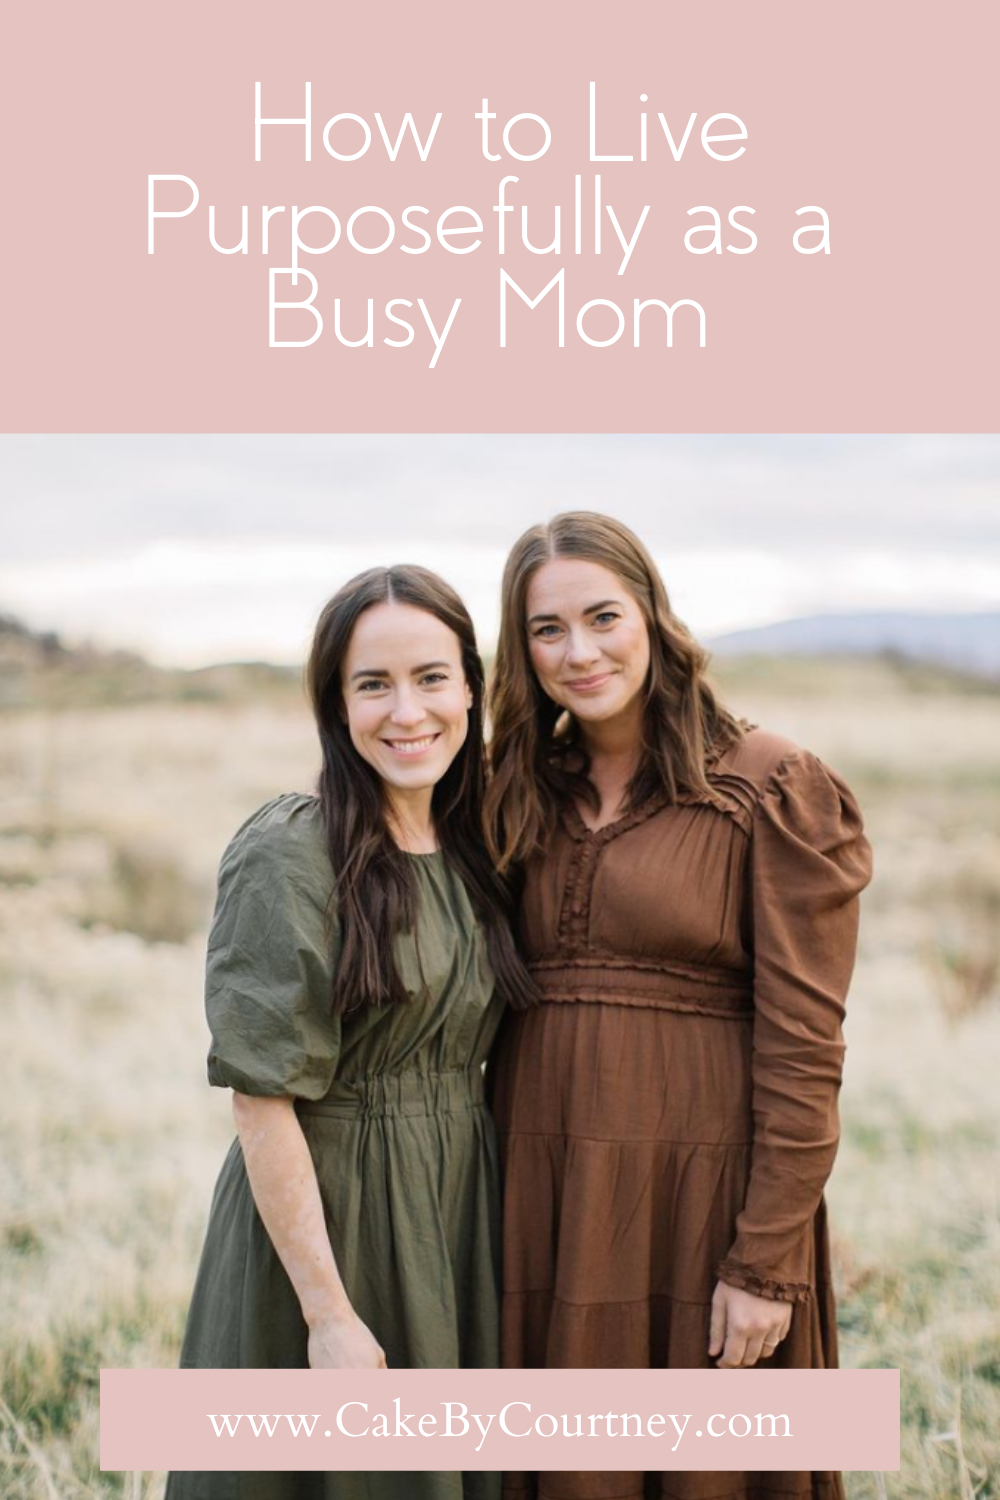 how to live purposefully as a busy mom. www.cakebycourtney.com